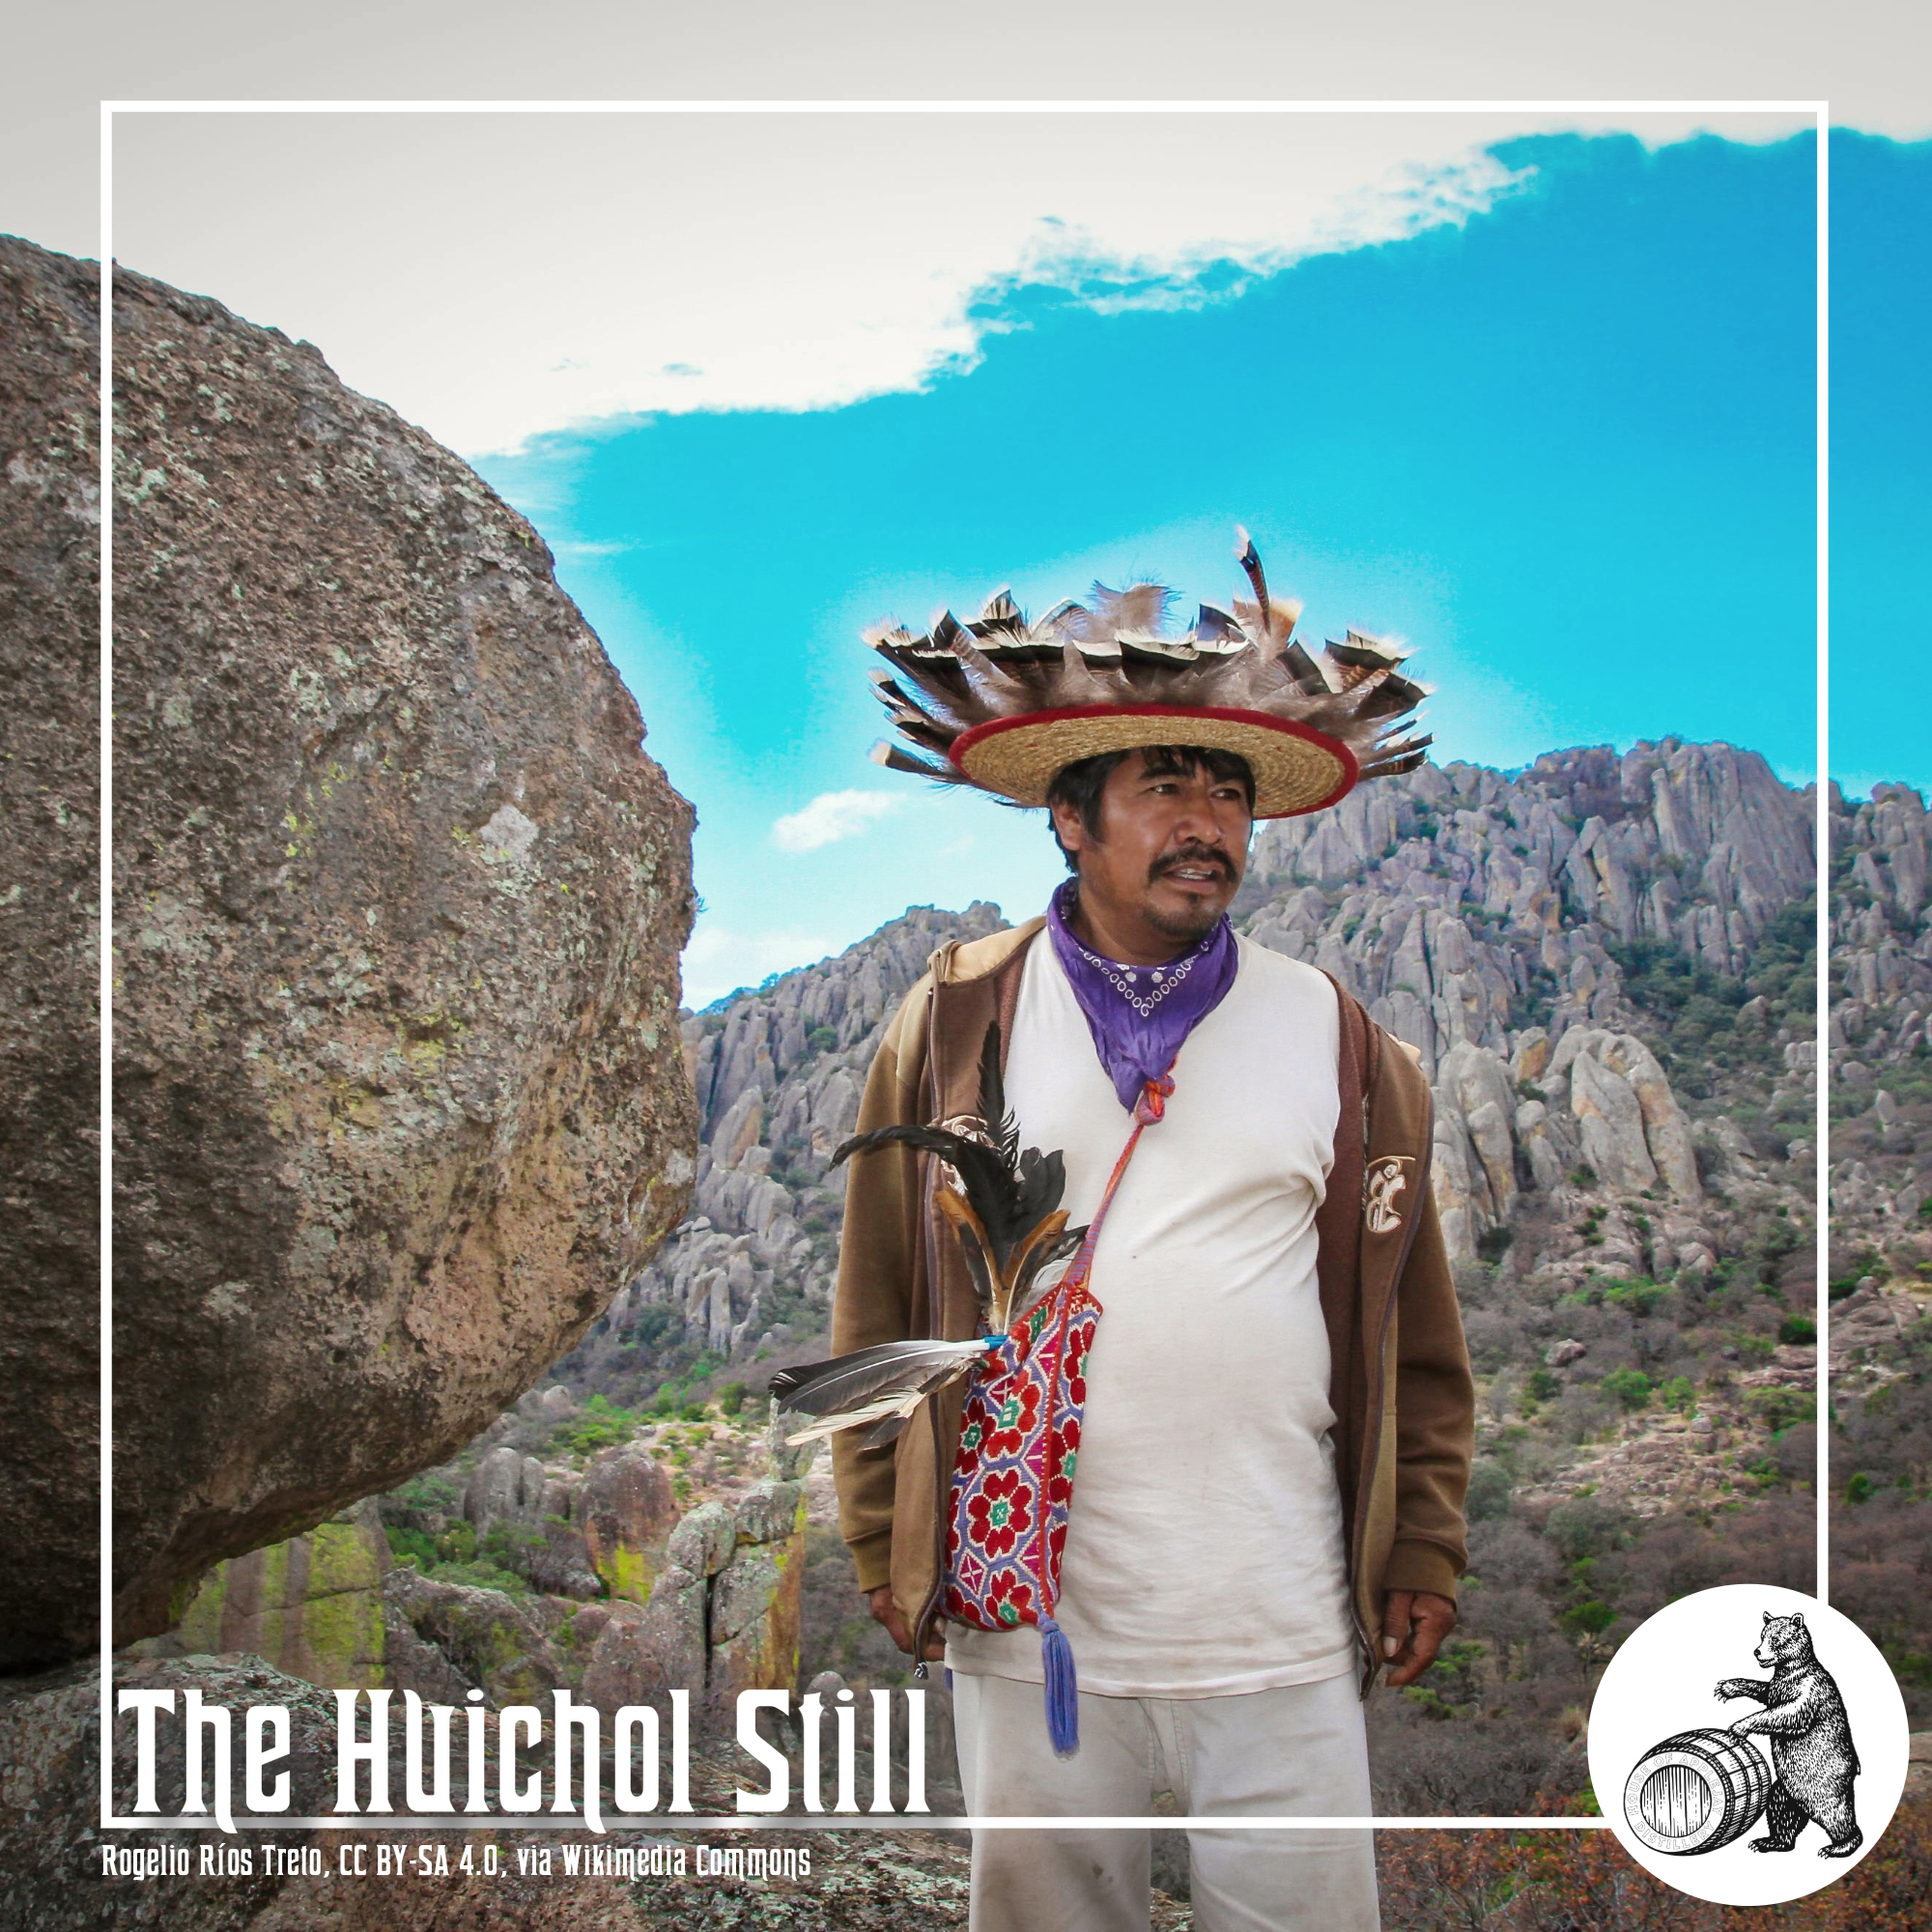 The Mystery “Huichol” Stills